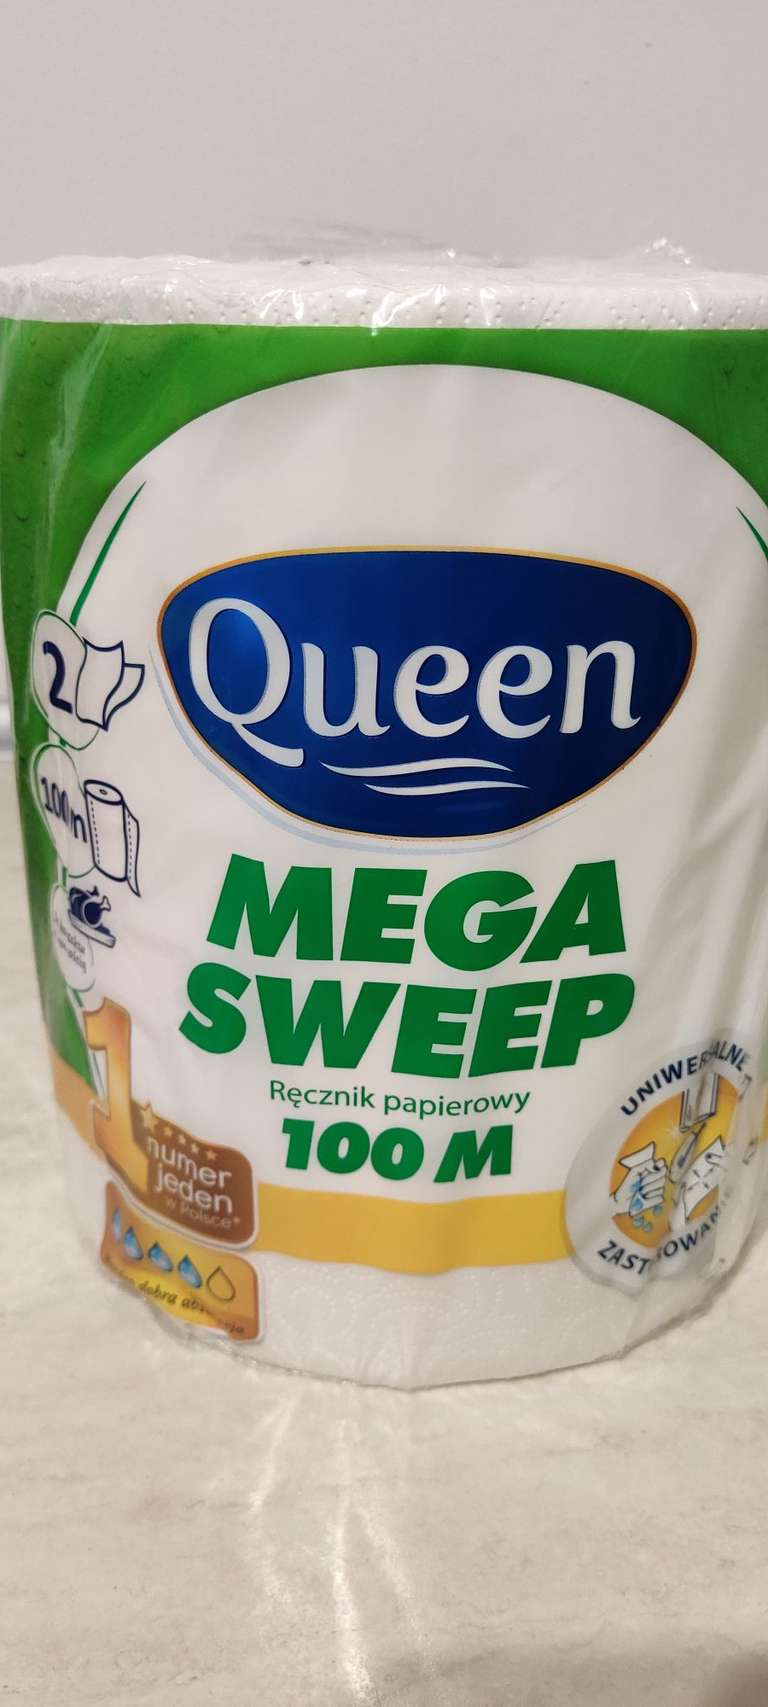 Papierowe ręczniki Queen Mega Sweep Biedronka